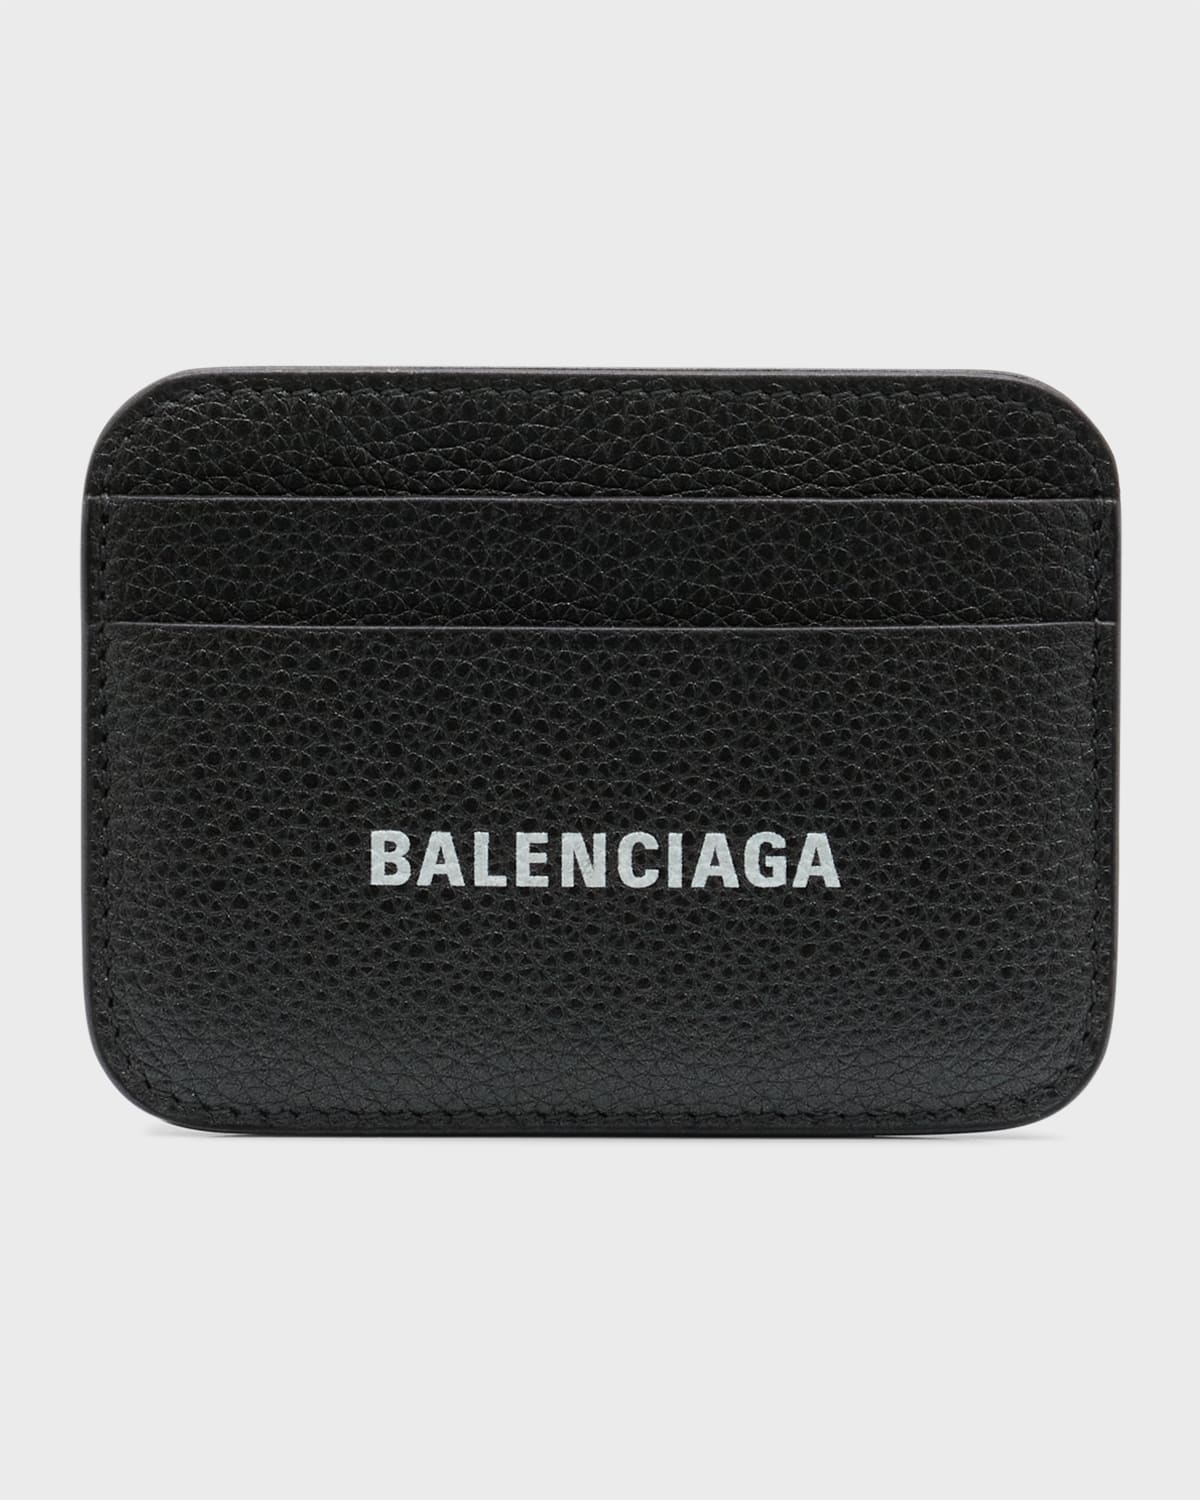 BALENCIAGA CASH CARD HOLDER METALLIZED